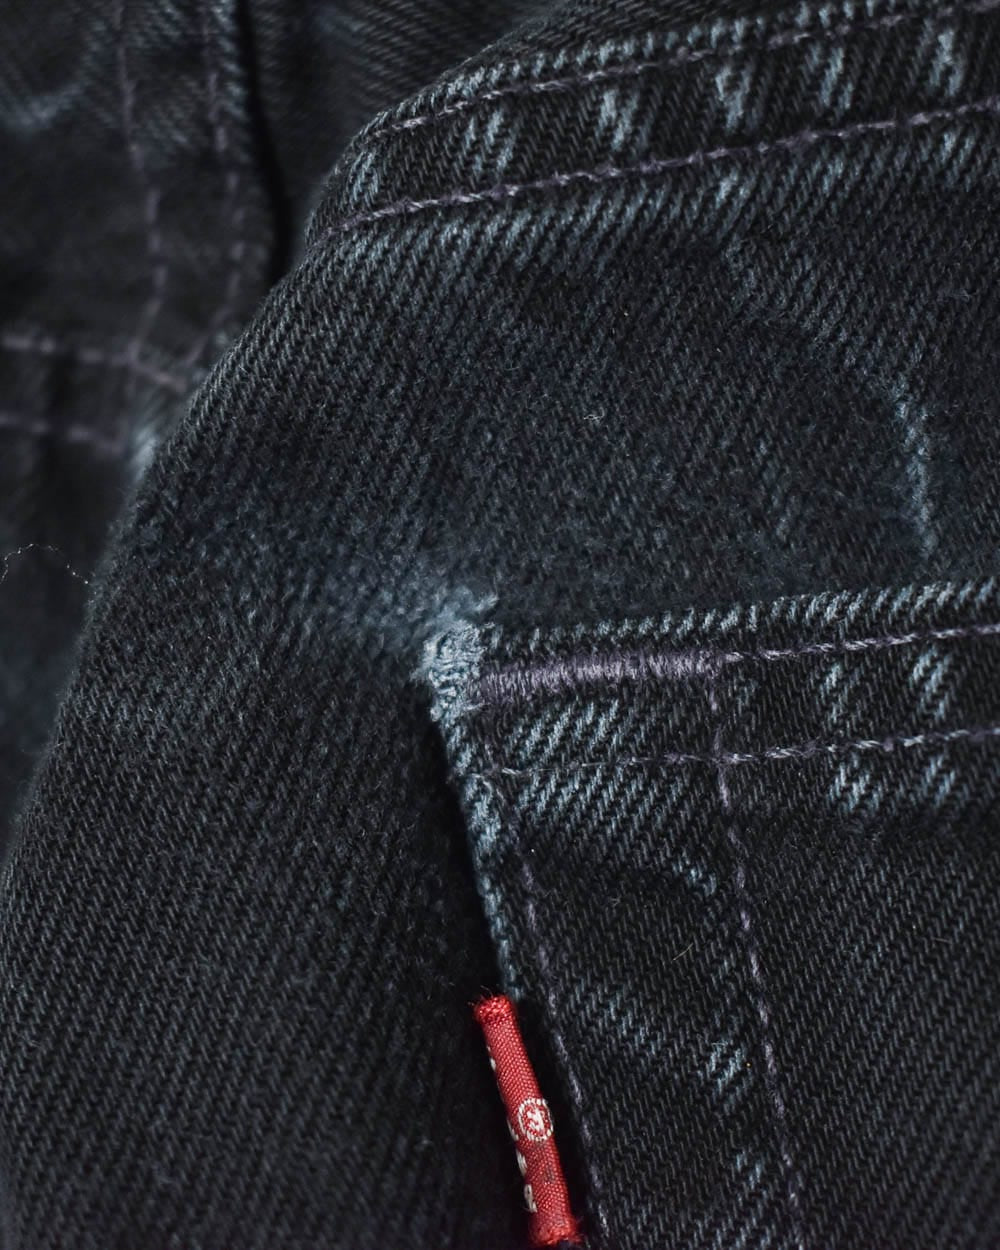 Black Levi's 521 Jeans - W34 L30